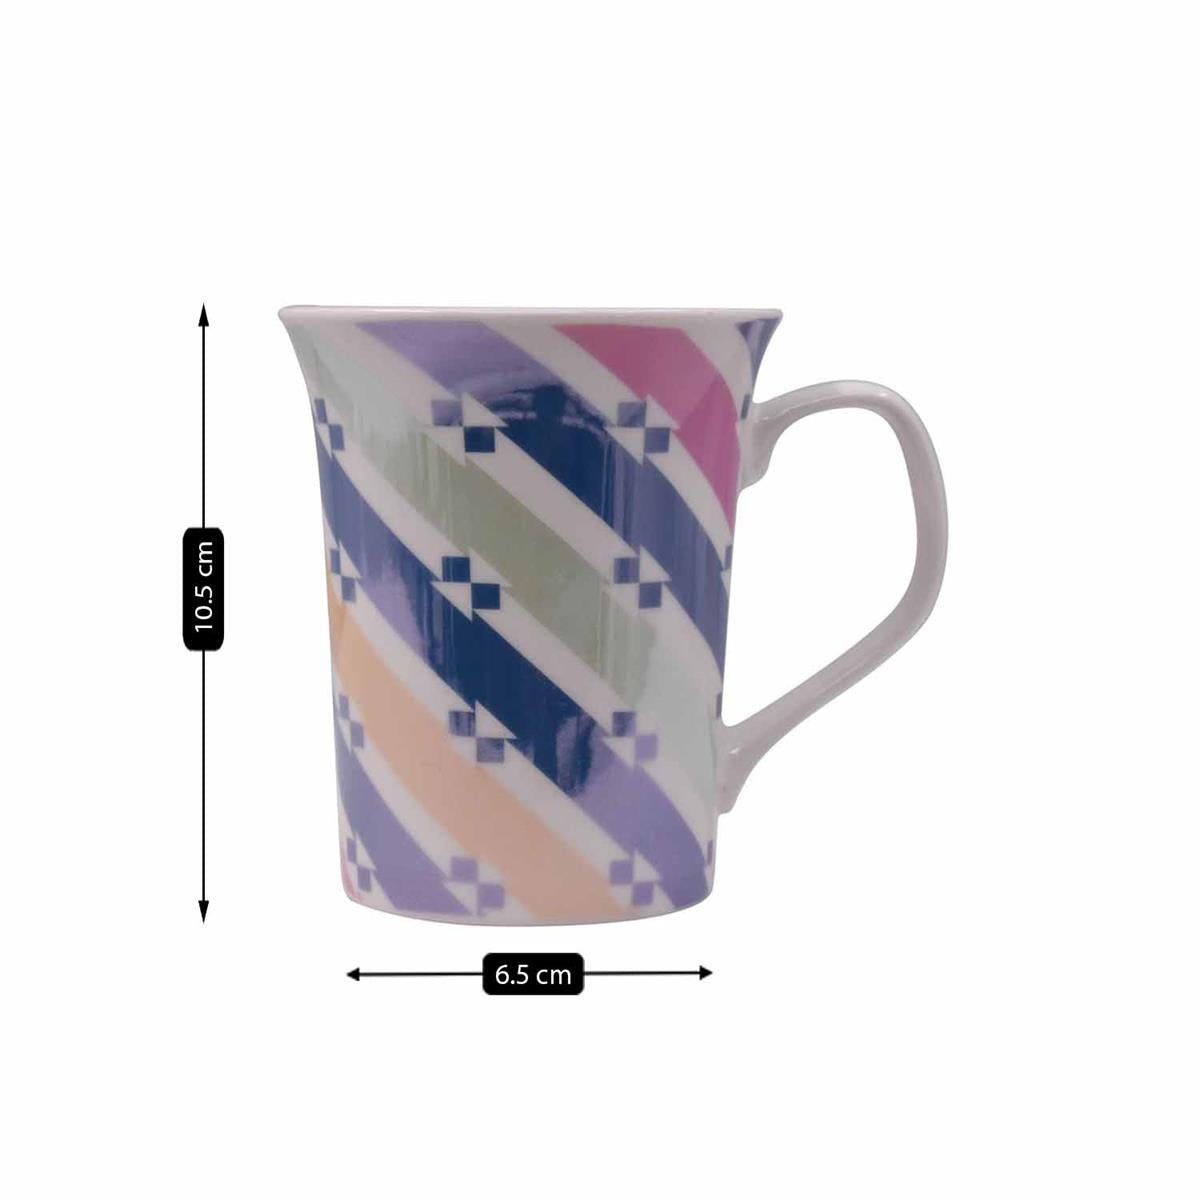 Printed Ceramic Tall Coffee or Tea Mug with handle - 325ml (4118-D)